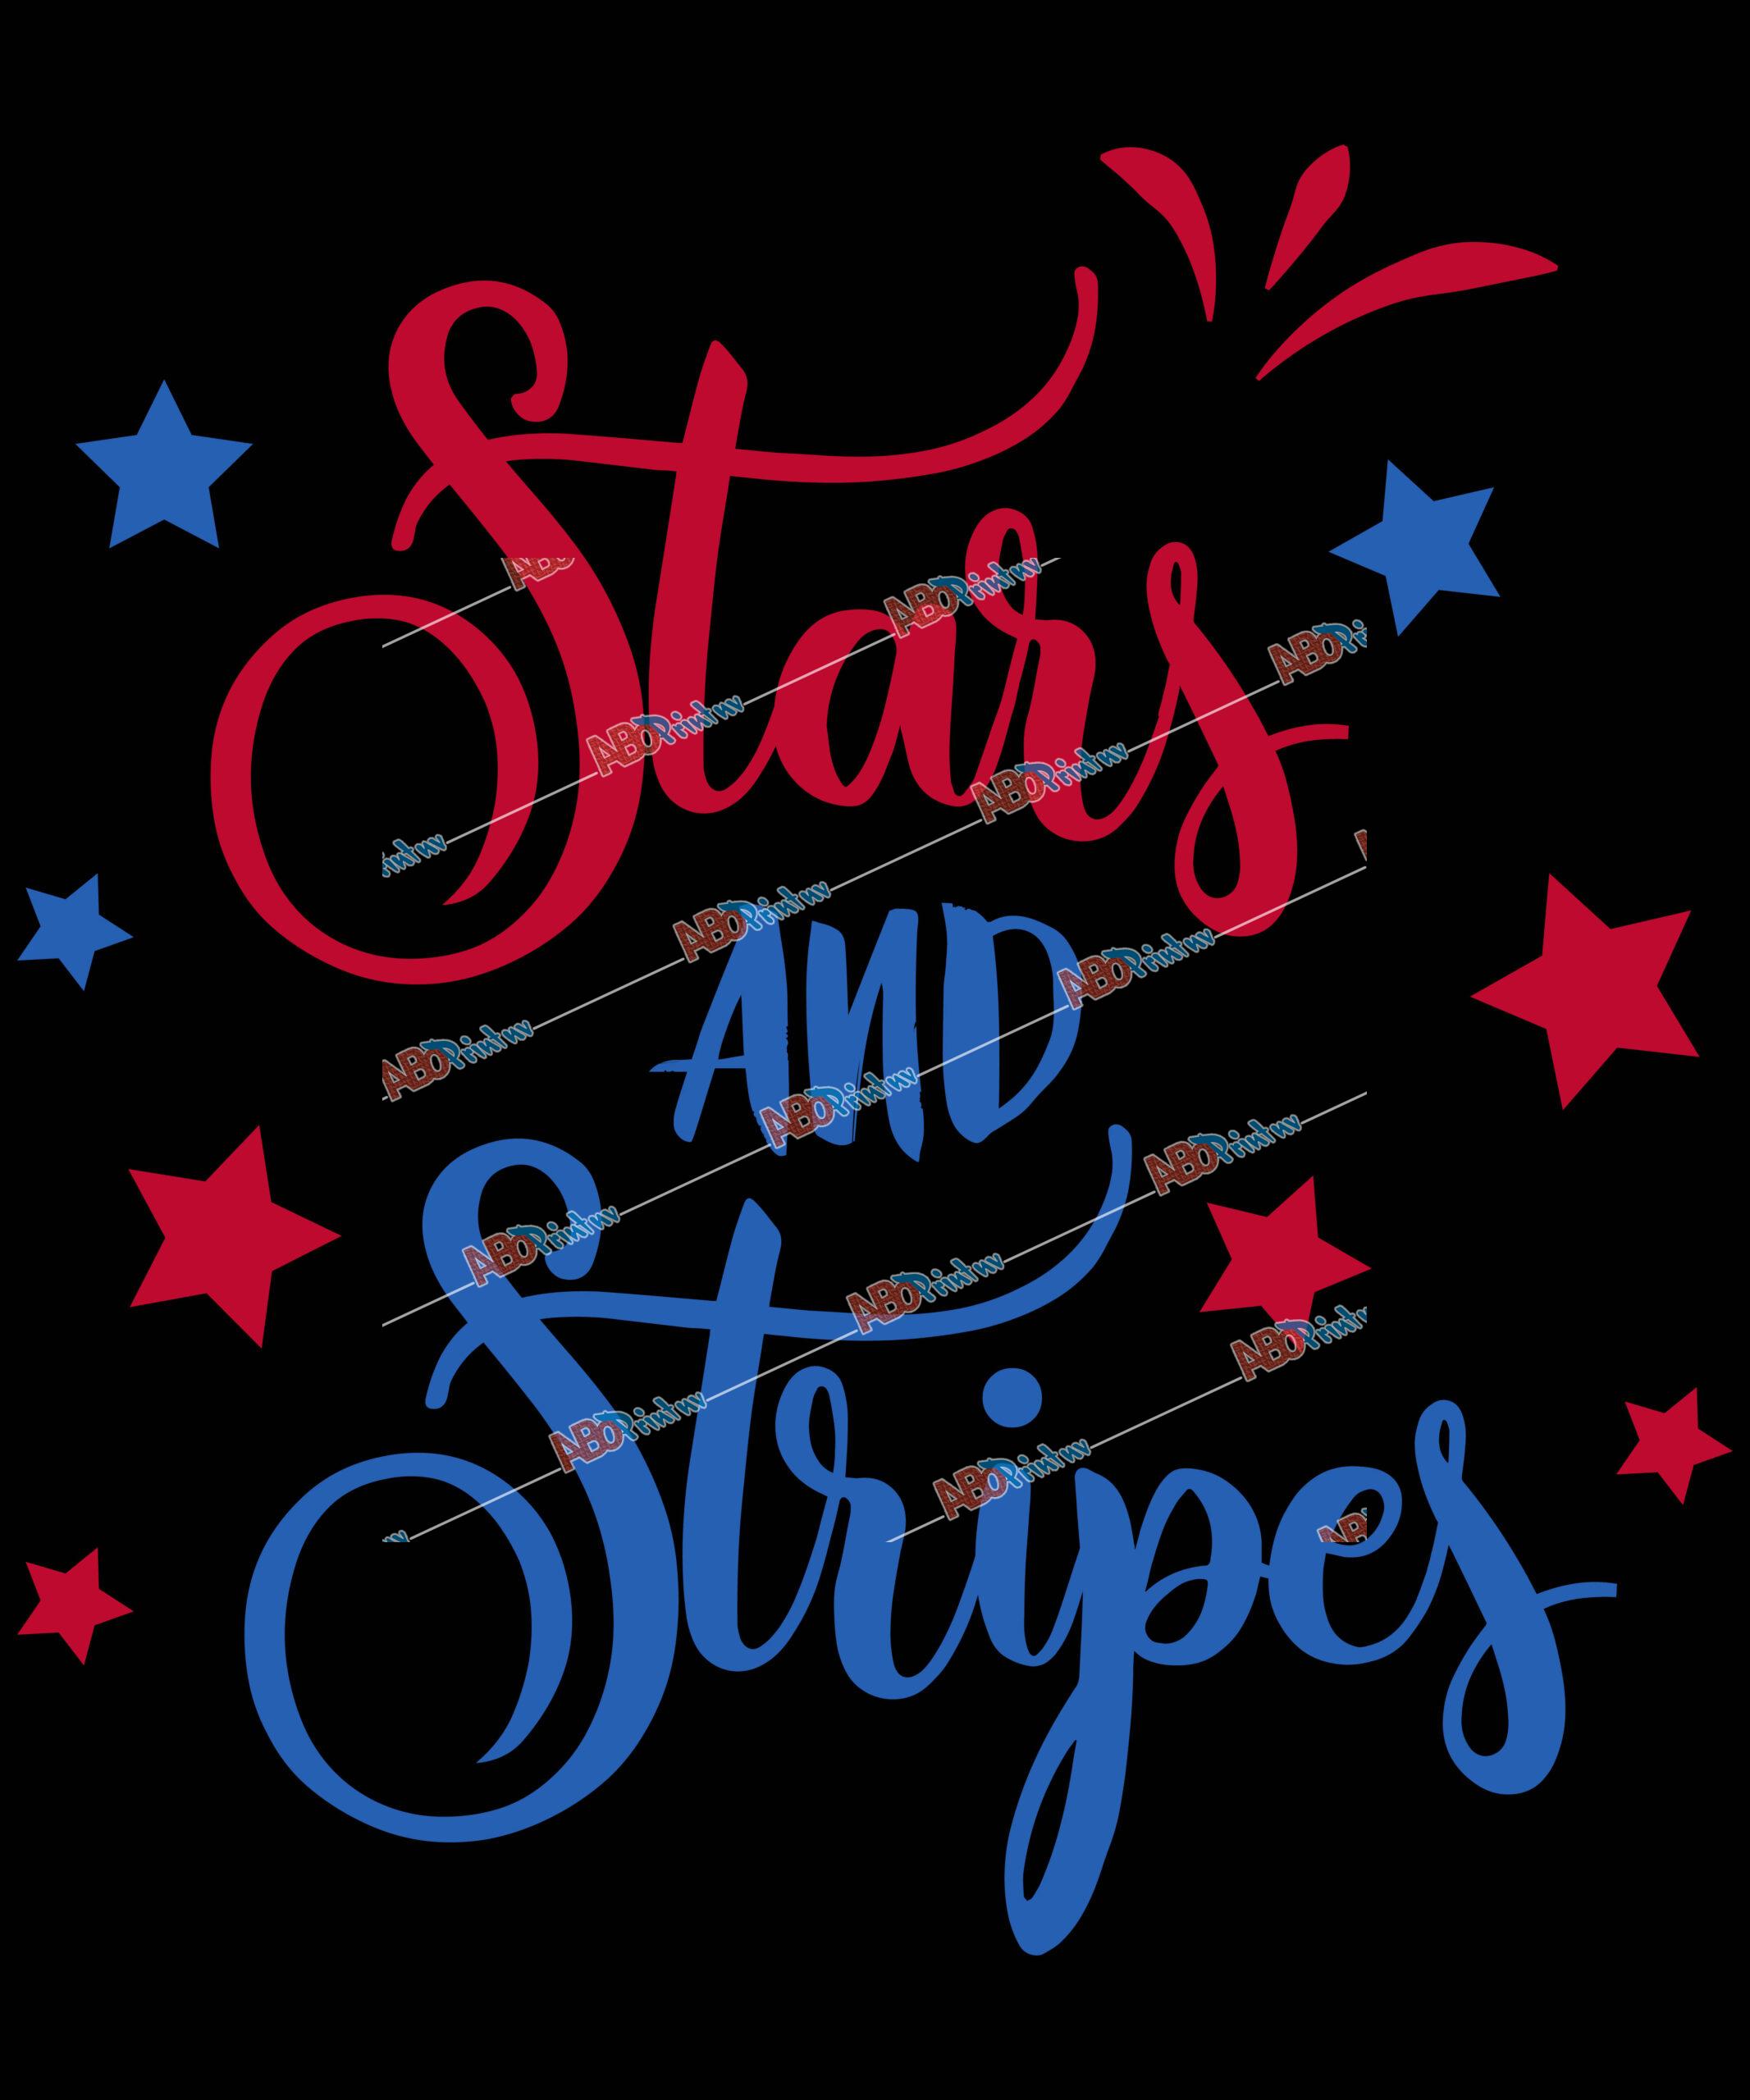 Stars and Stripes.jpg